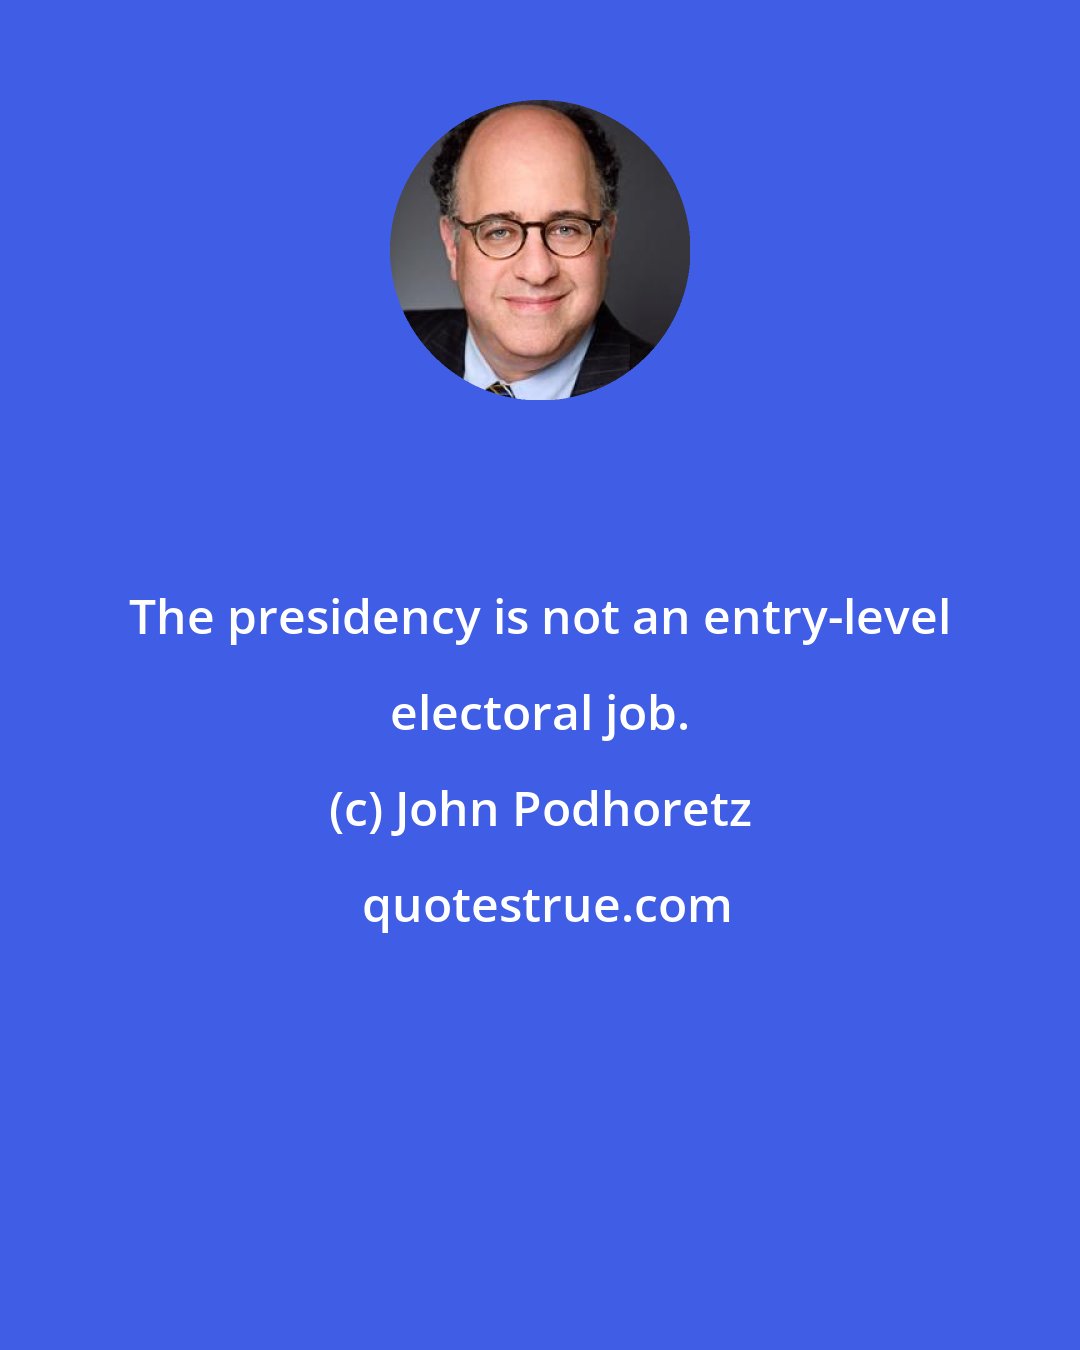 John Podhoretz: The presidency is not an entry-level electoral job.